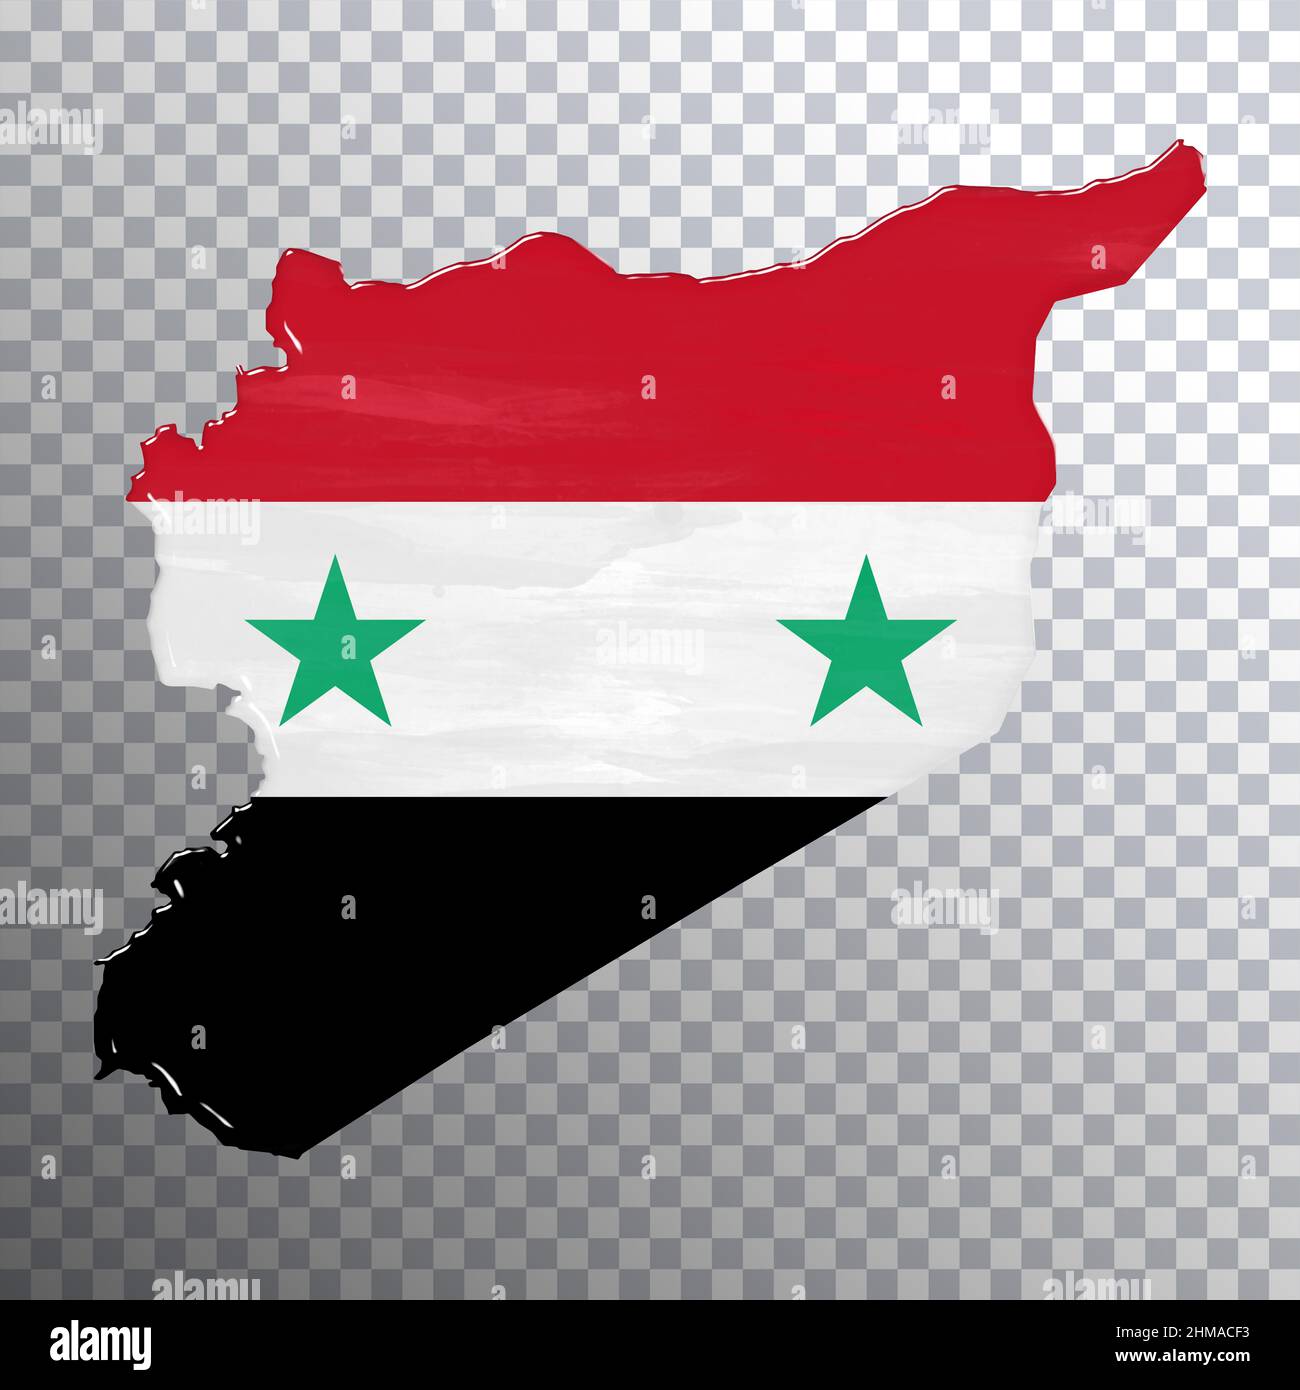 Syrien Flagge Karte - Kostenlose Vektorgrafik auf Pixabay - Pixabay